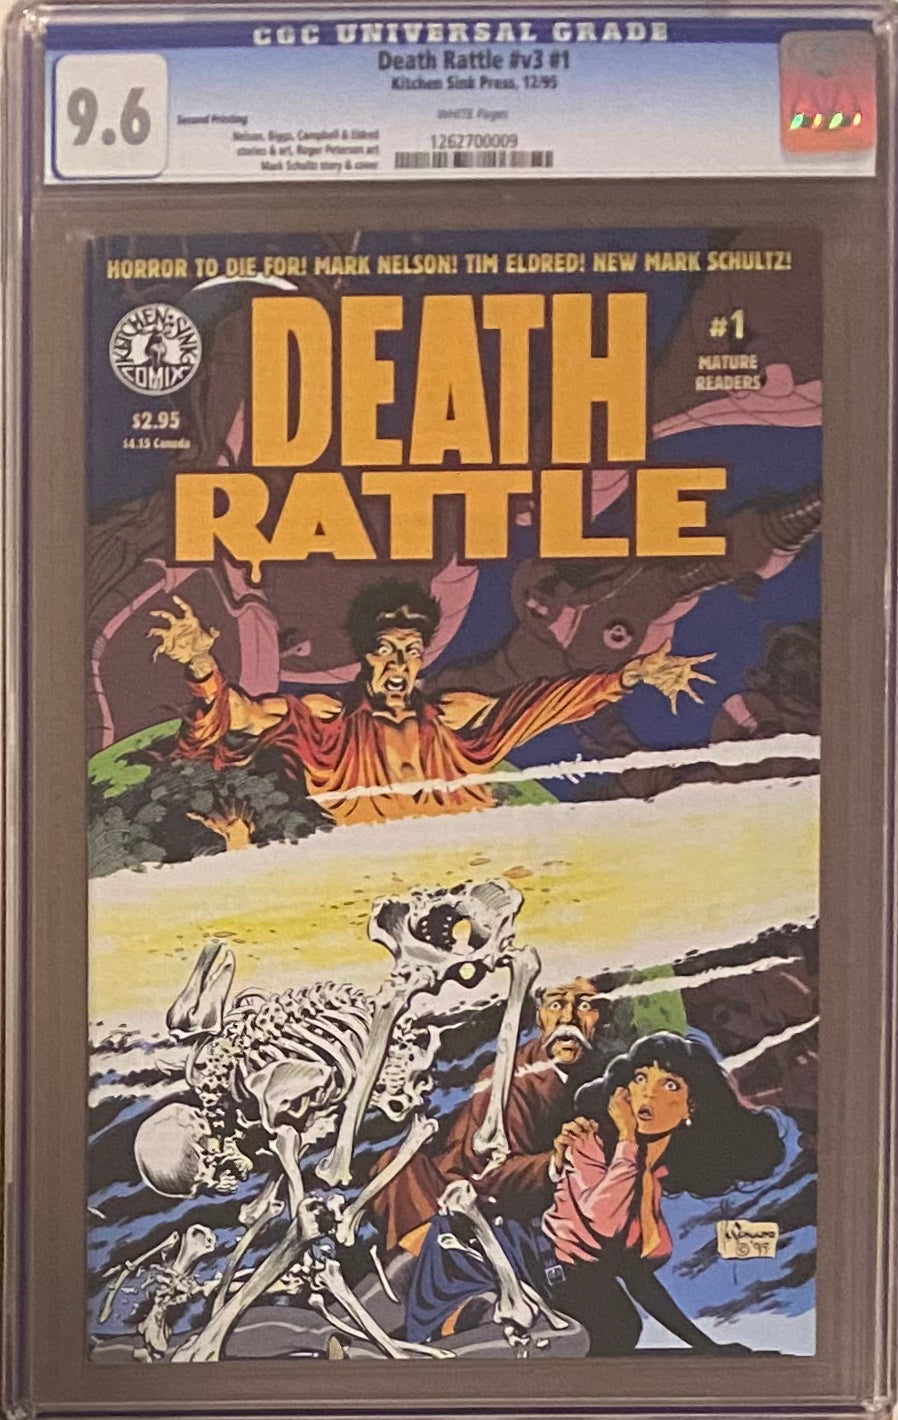 Death Rattle #v3 #1 CGC 9.6